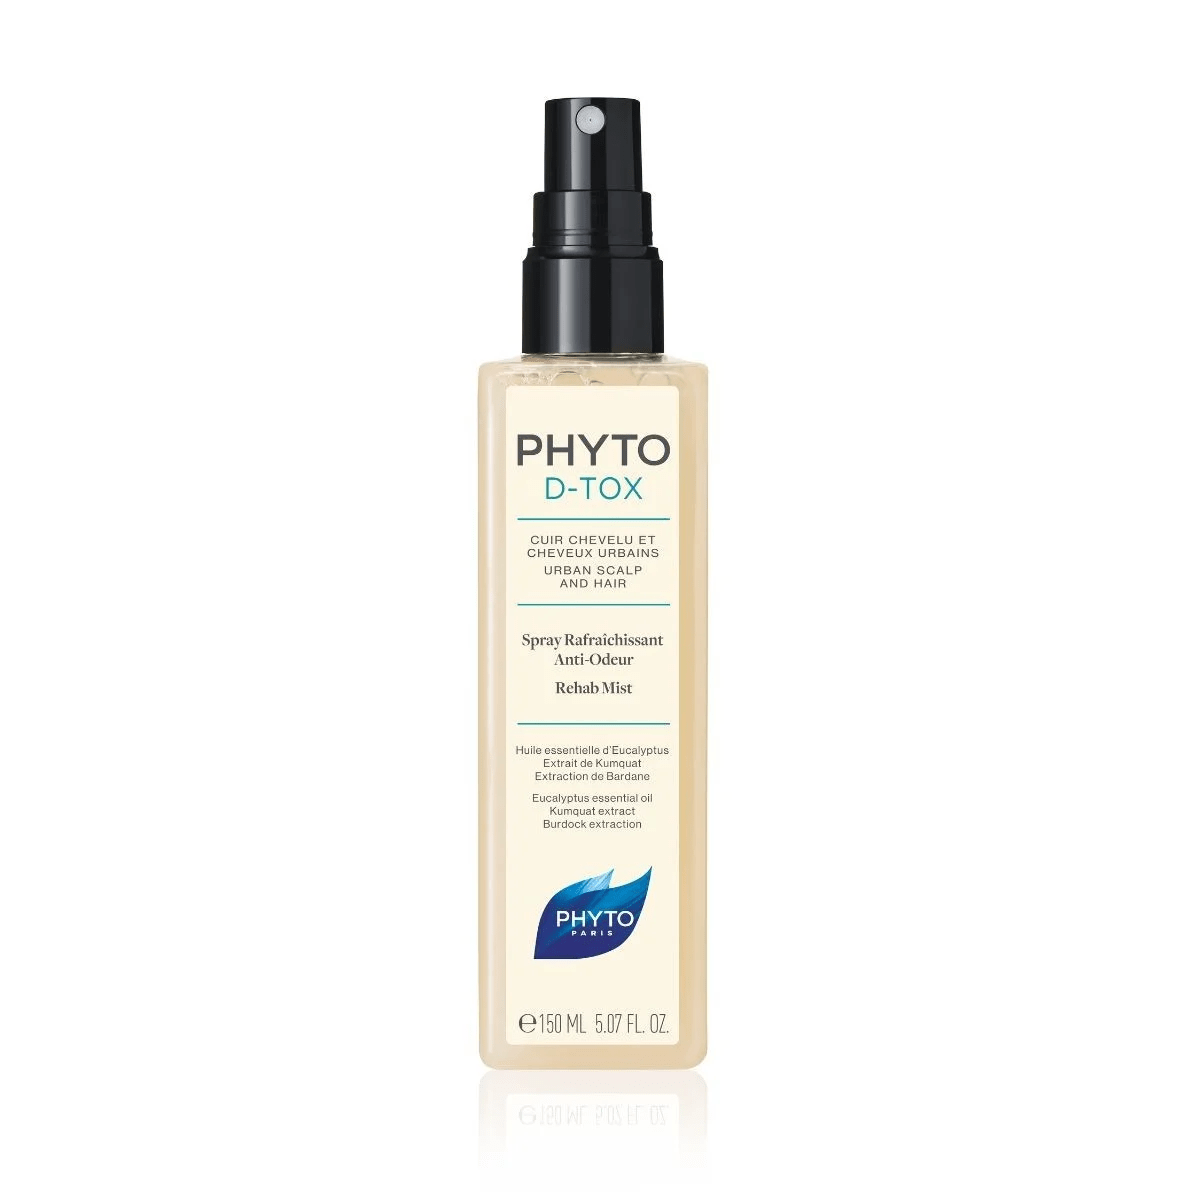 PHYTO Soins & Beauté PhytoD-tox (spray rafraichissant anti-odeur) 150ml